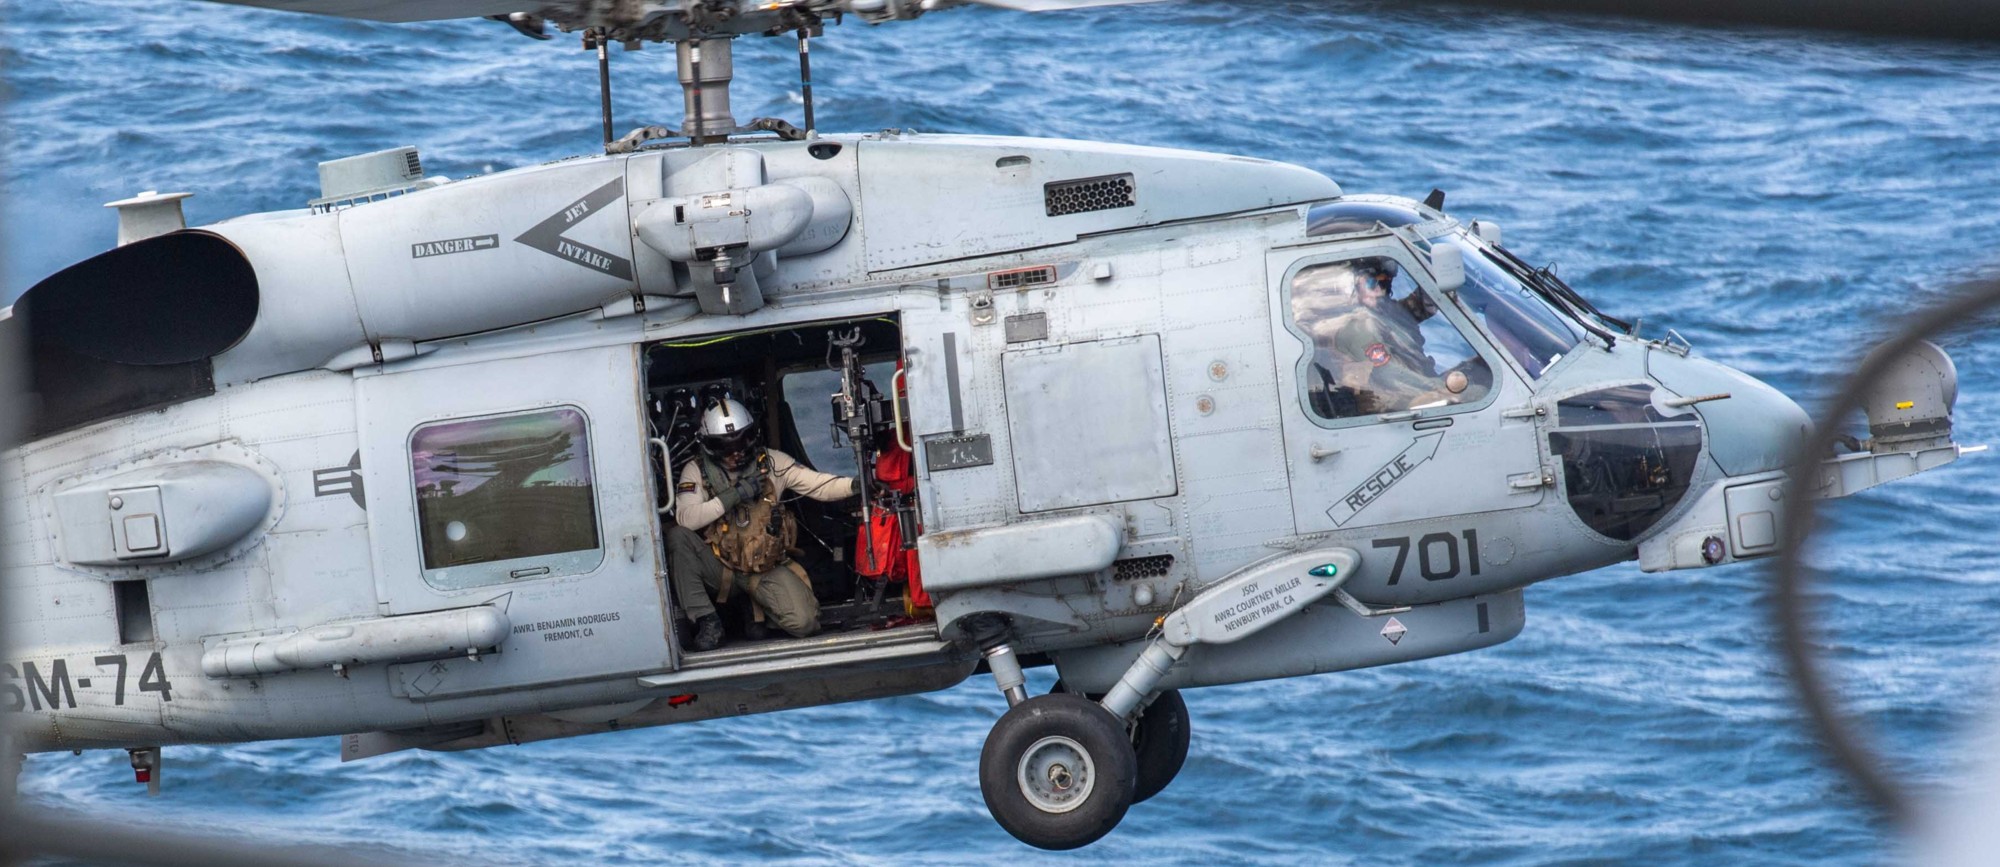 hsm-74 swamp foxes helicopter maritime strike squadron mh-60r seahawk cvw-3 cvn-69 uss dwight d. eisenhower 124